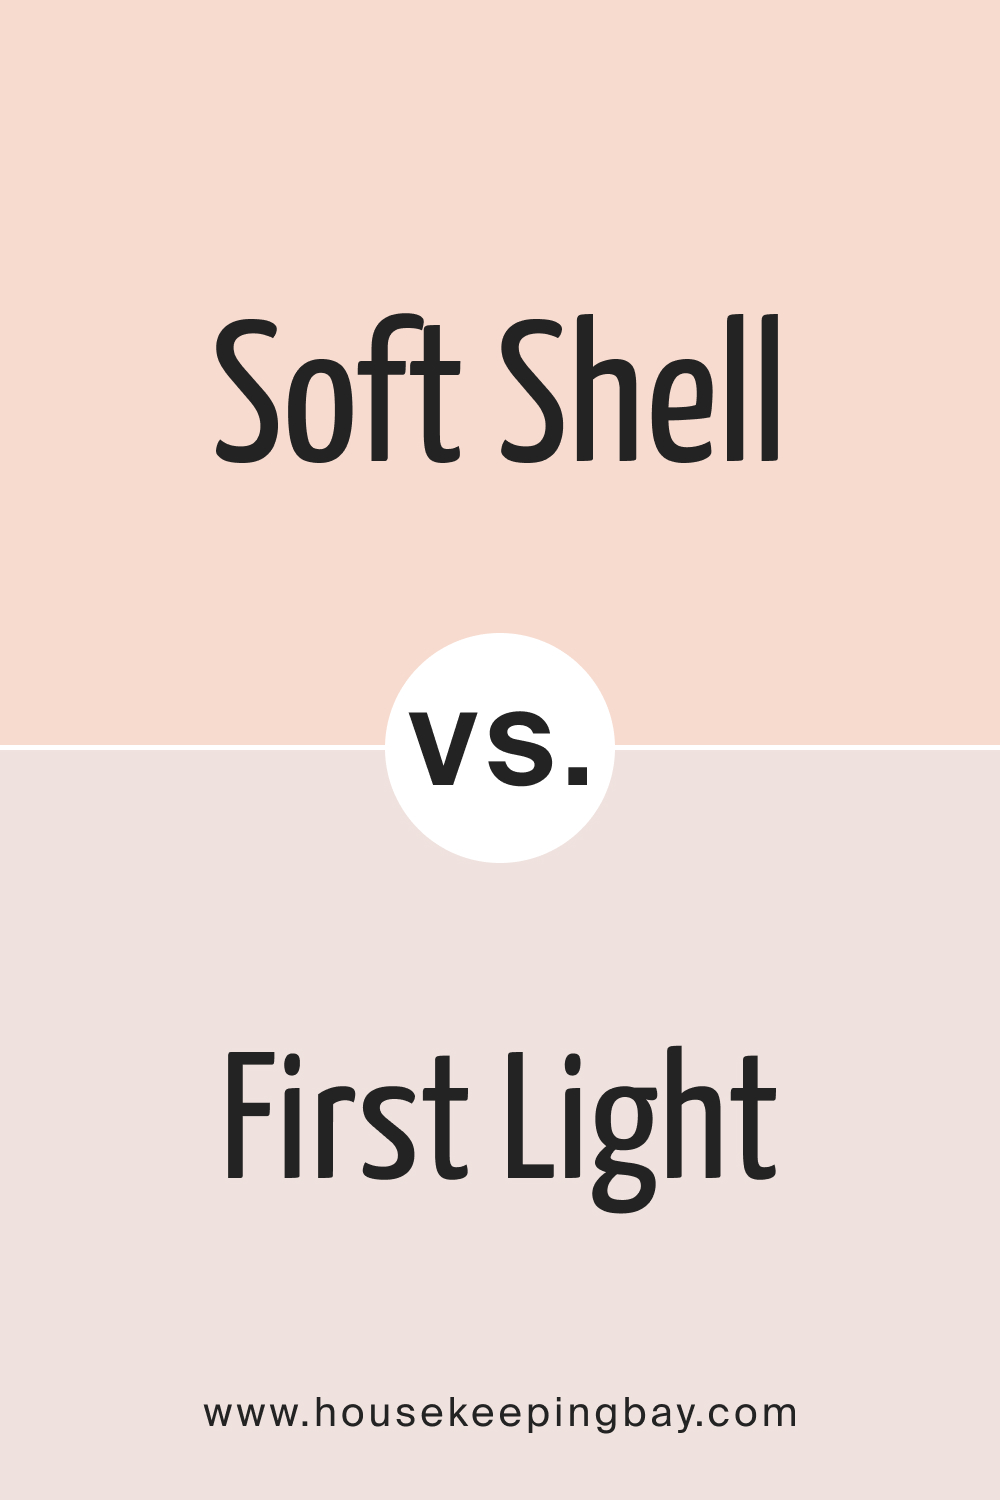 Soft Shell 015 vs. BM 2102 70 First Light